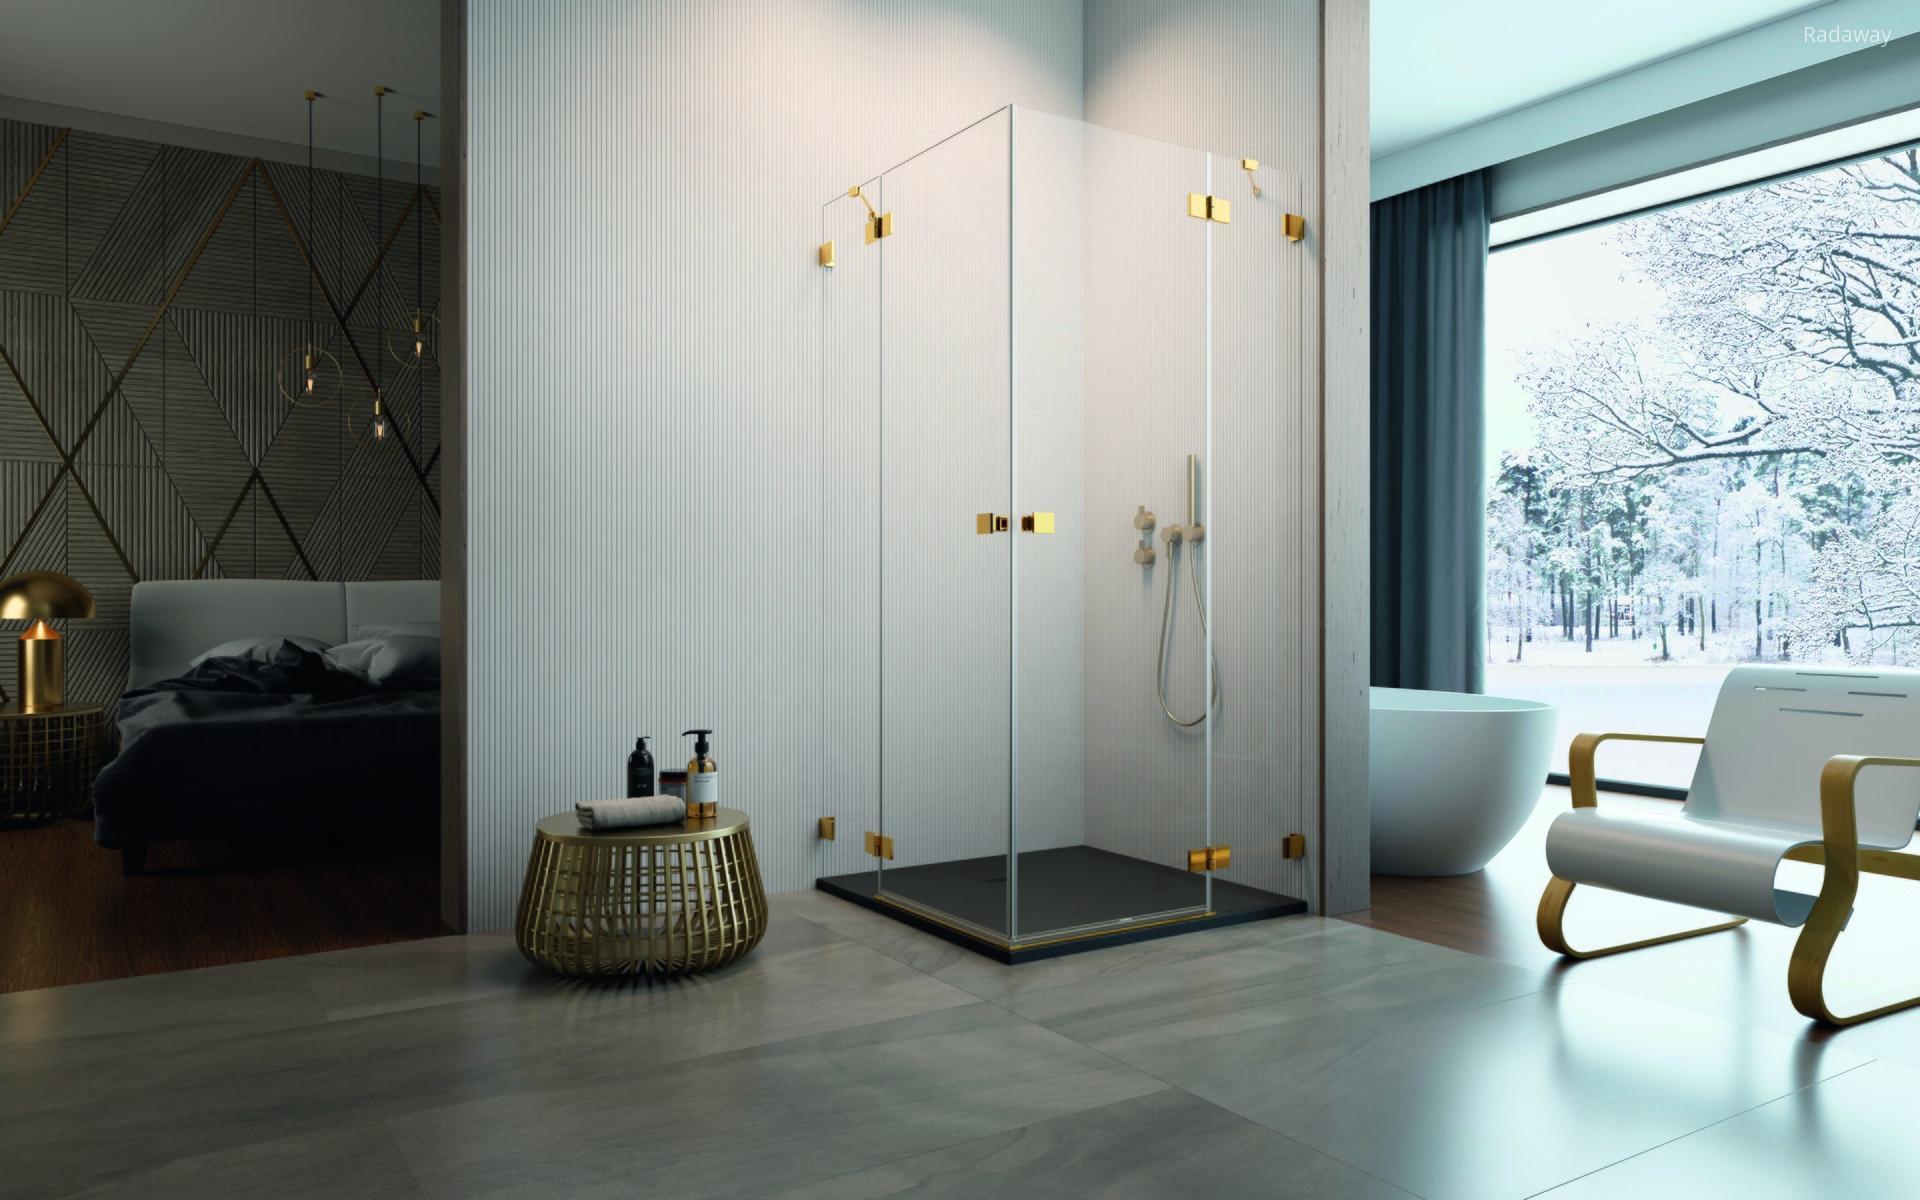 Üveg zuhanykabin - fürdő / WC ötlet, modern stílusban